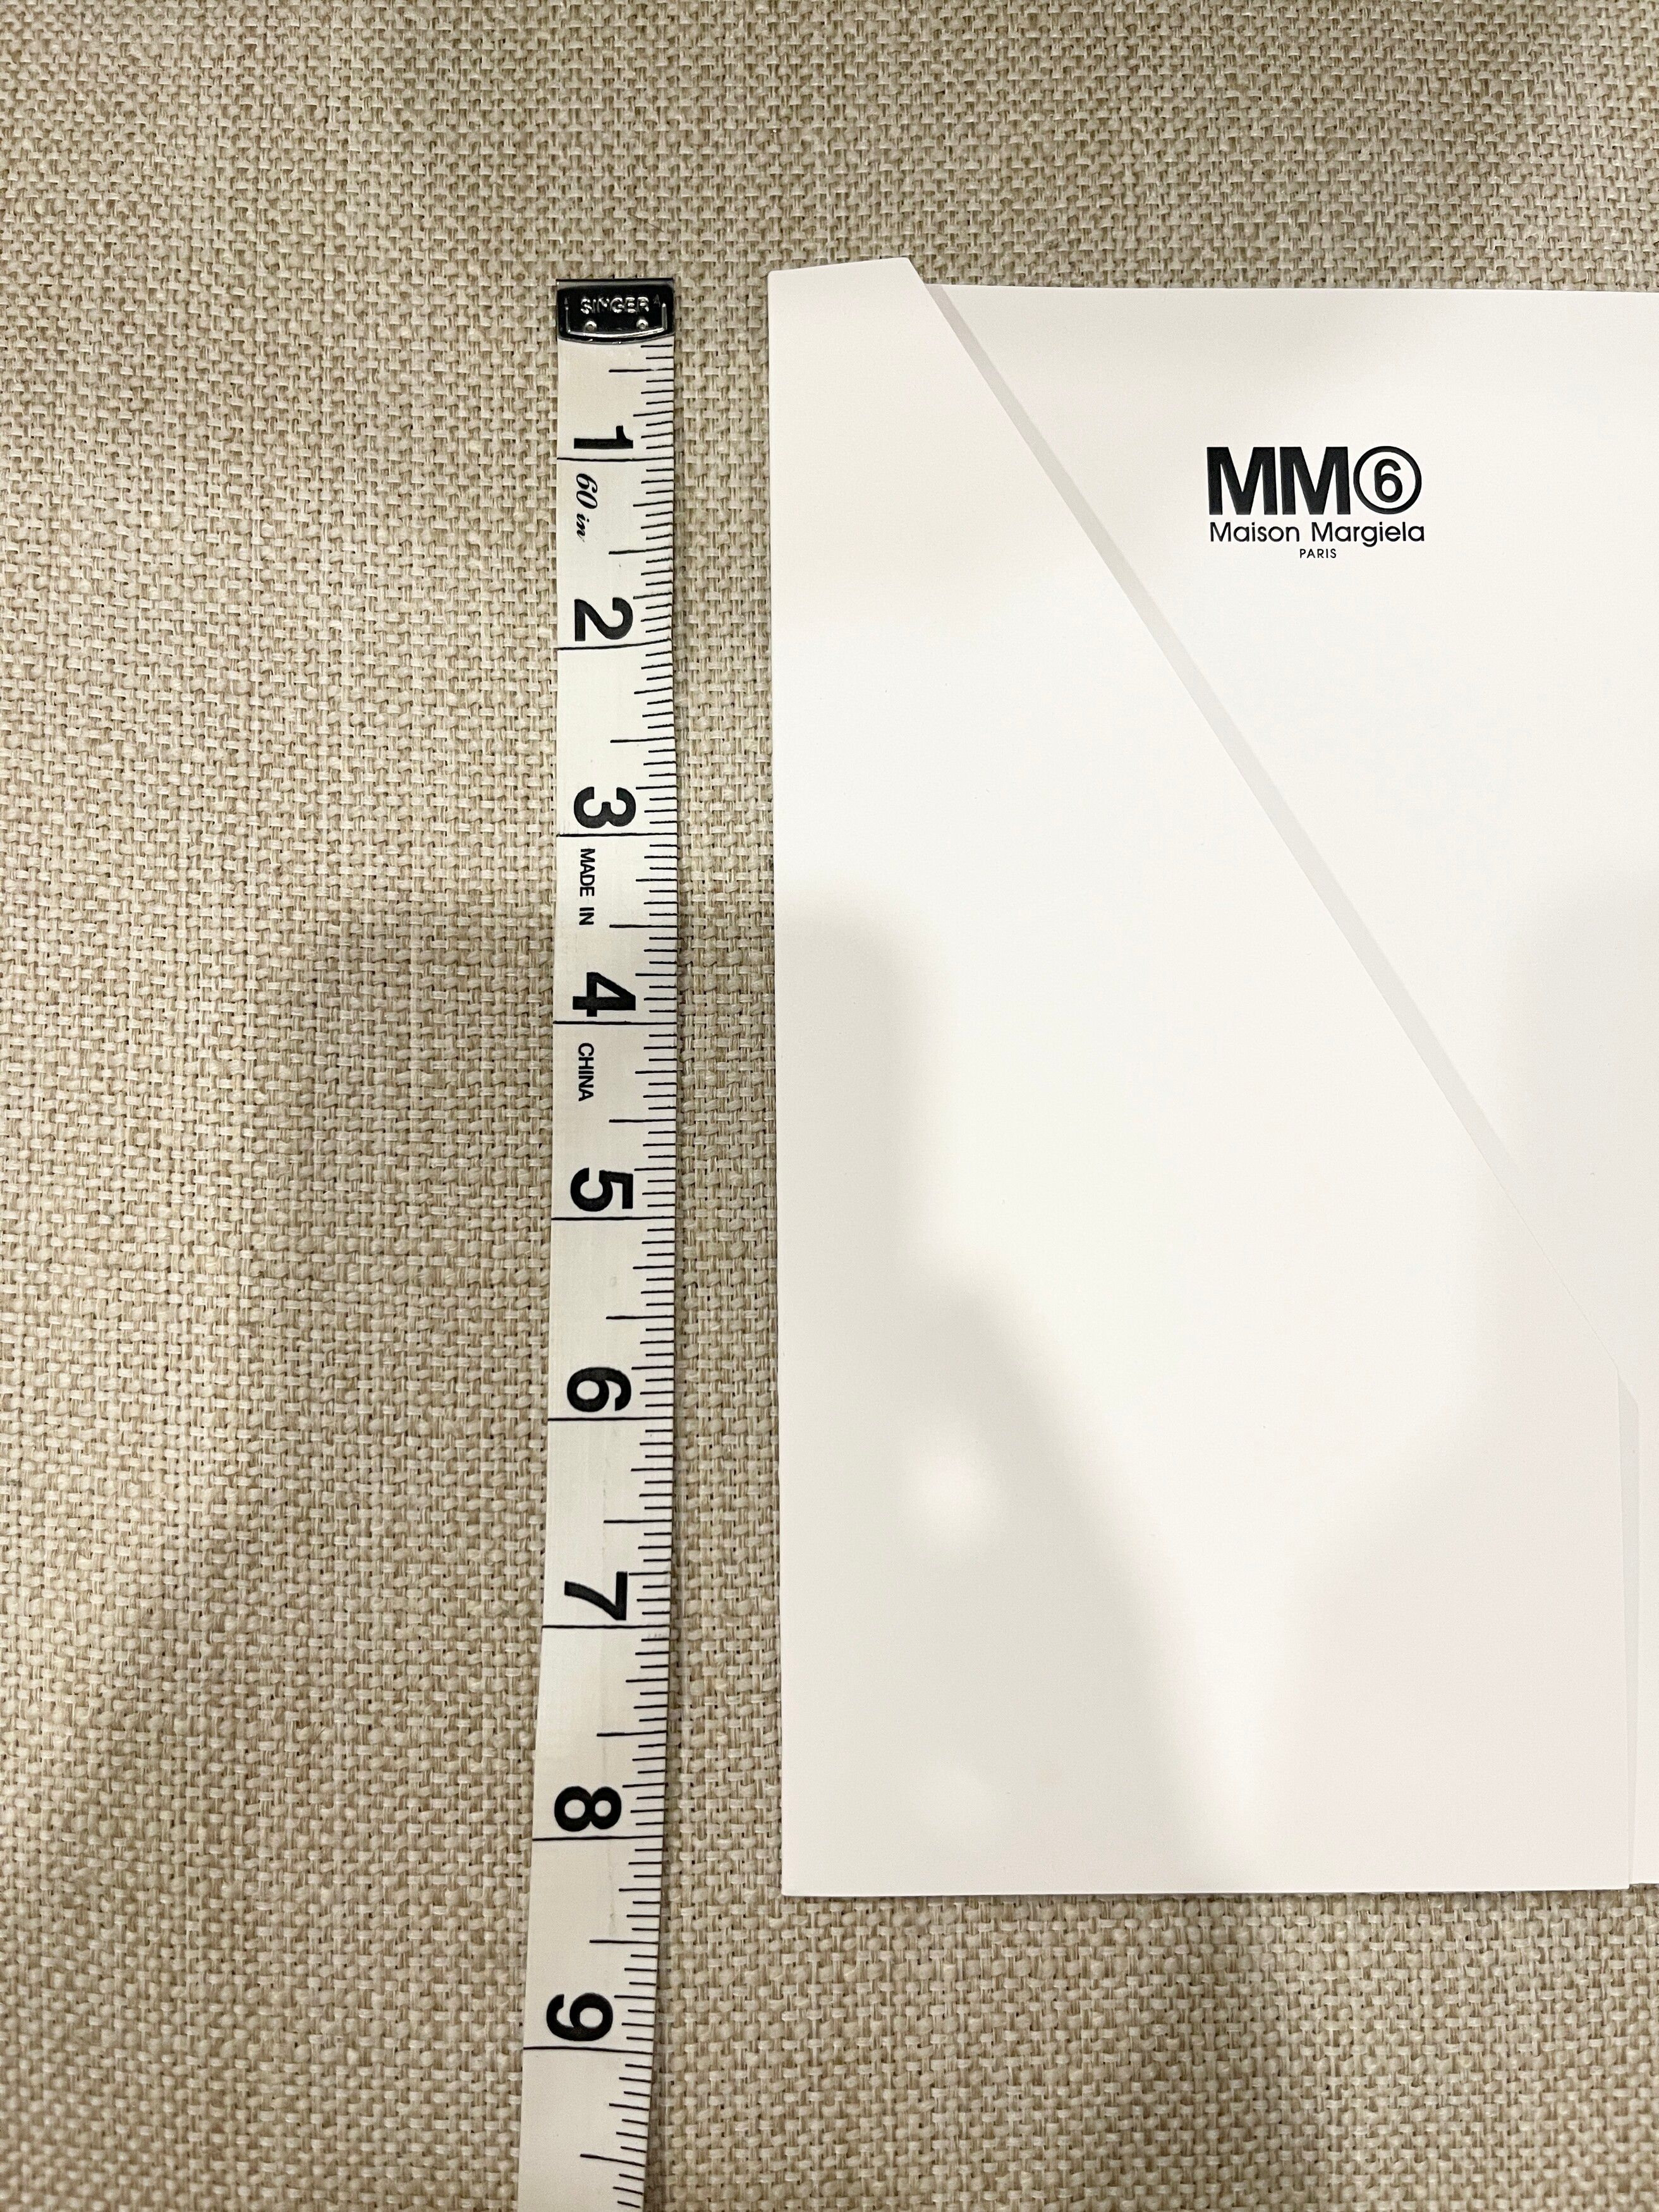 MM6 by Madison Margiela Small Paper Folder - 4